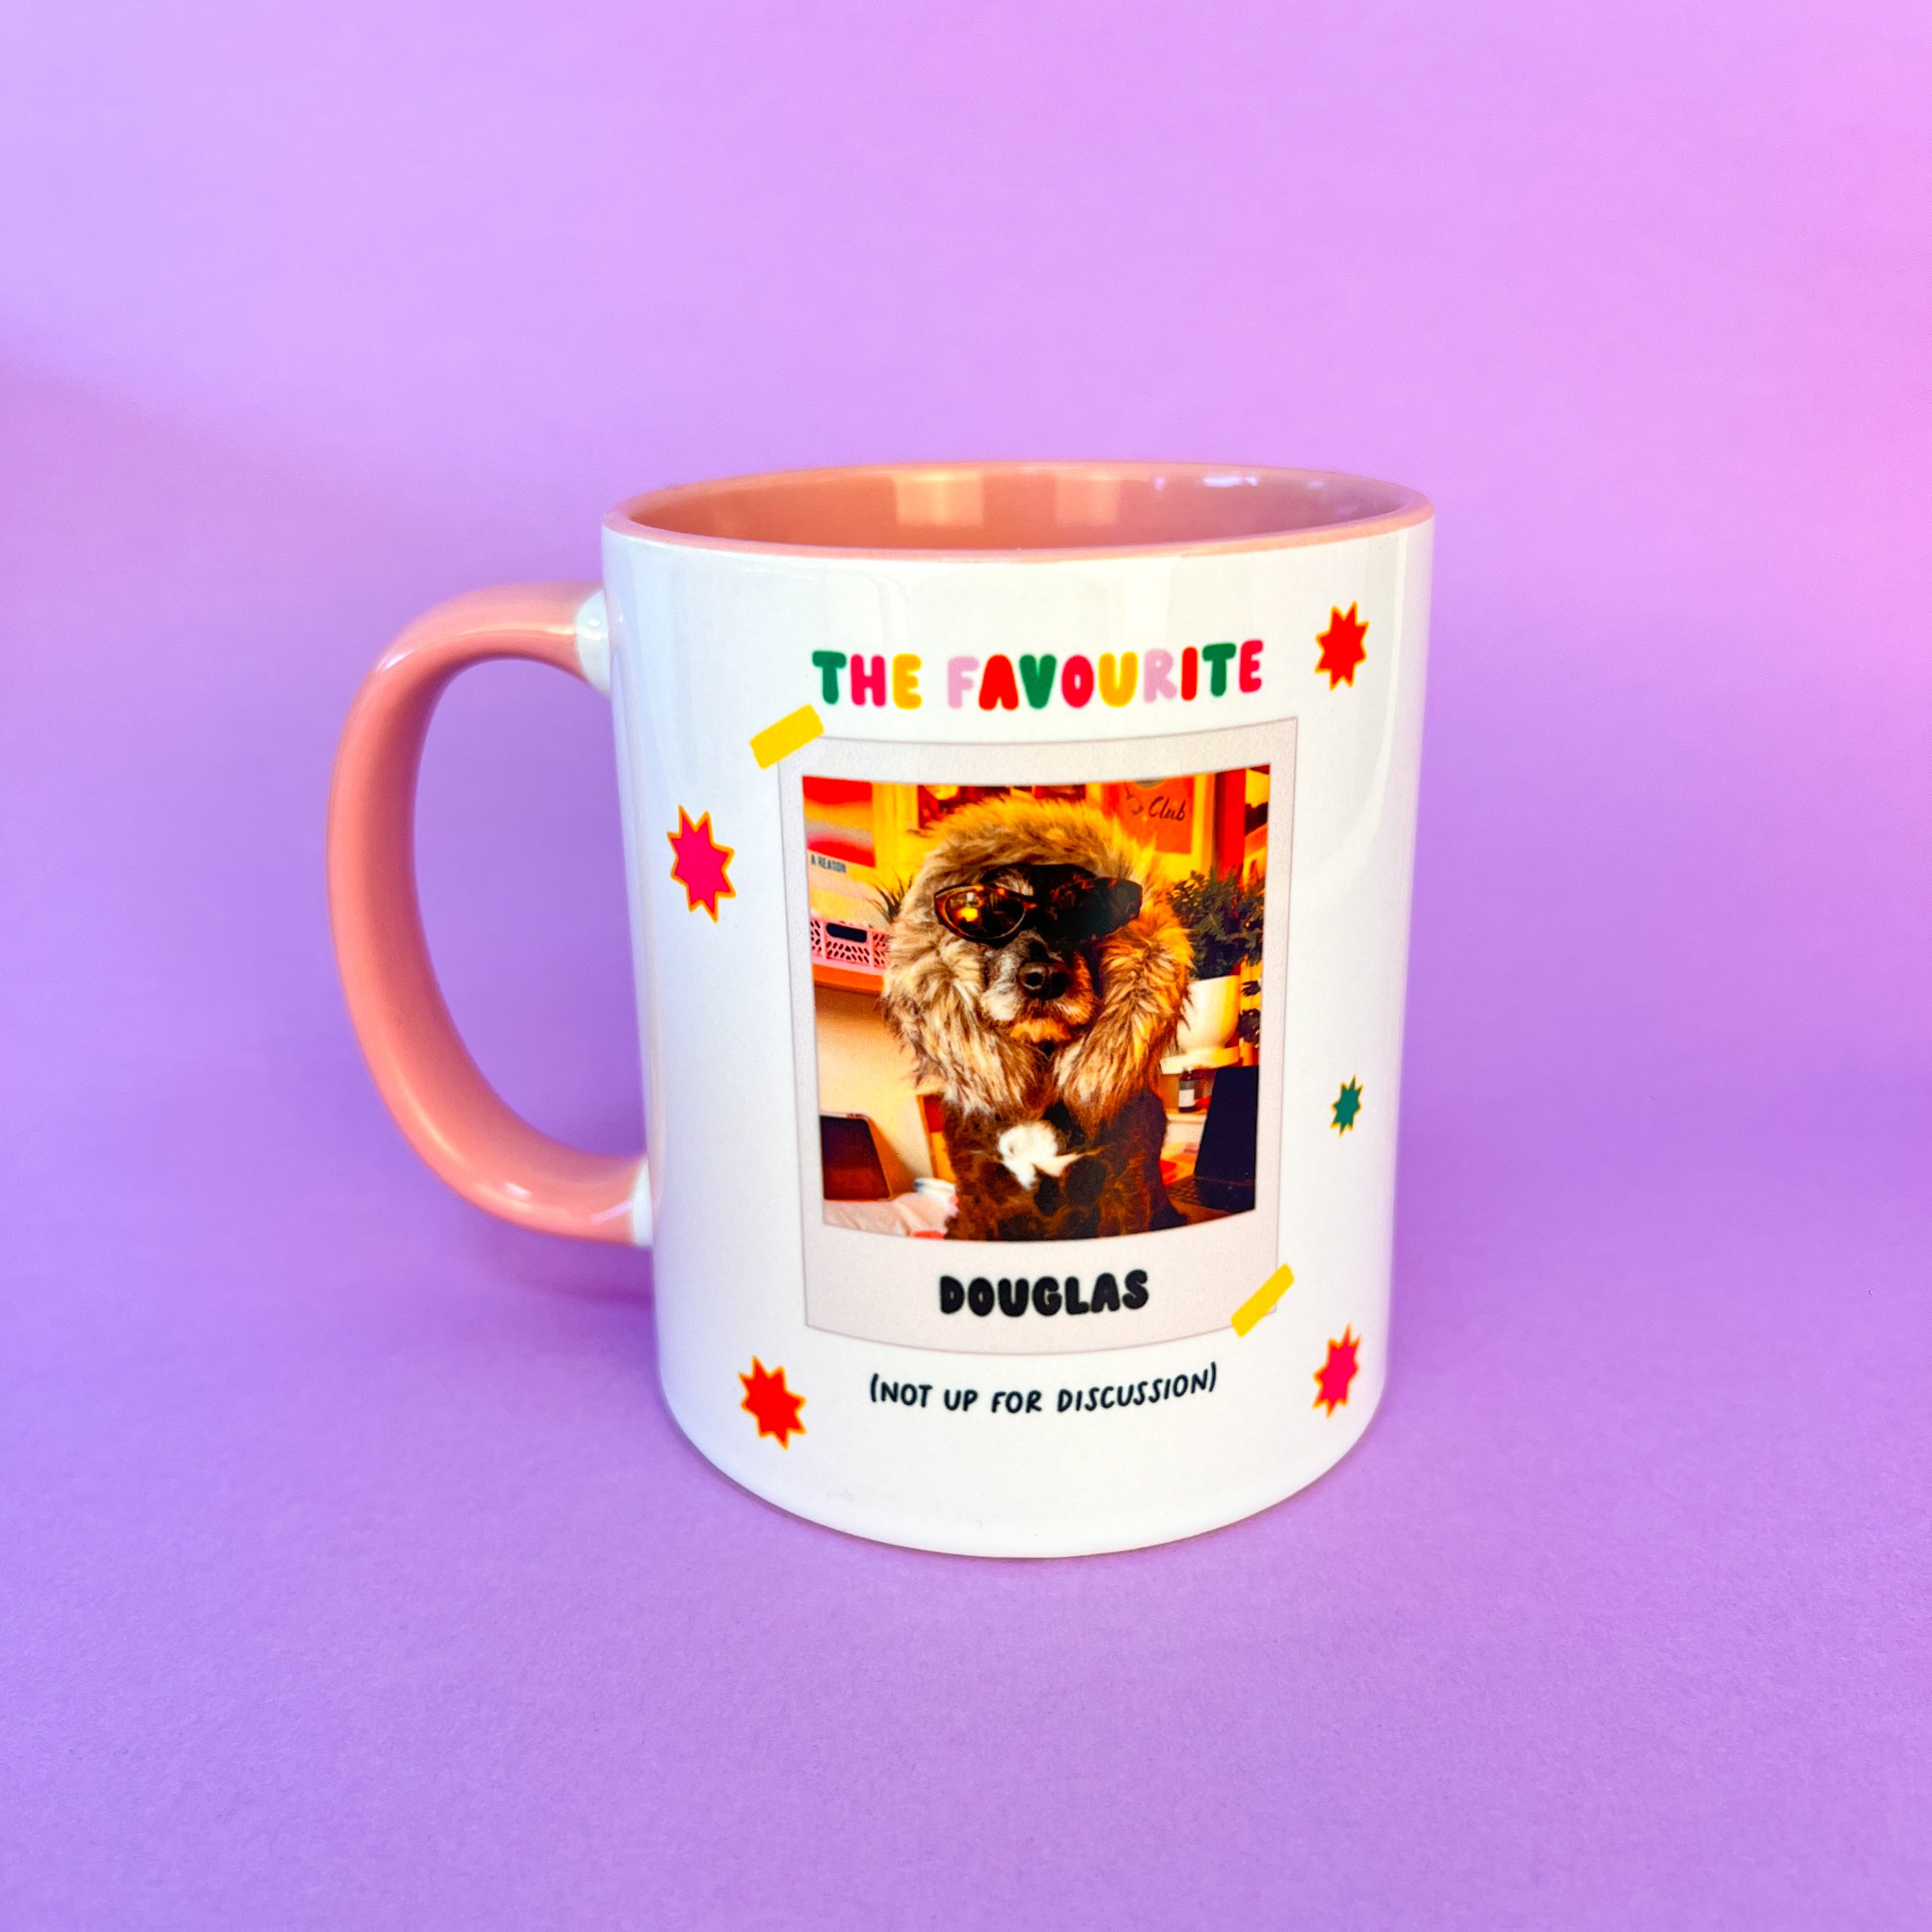 The favourite mug